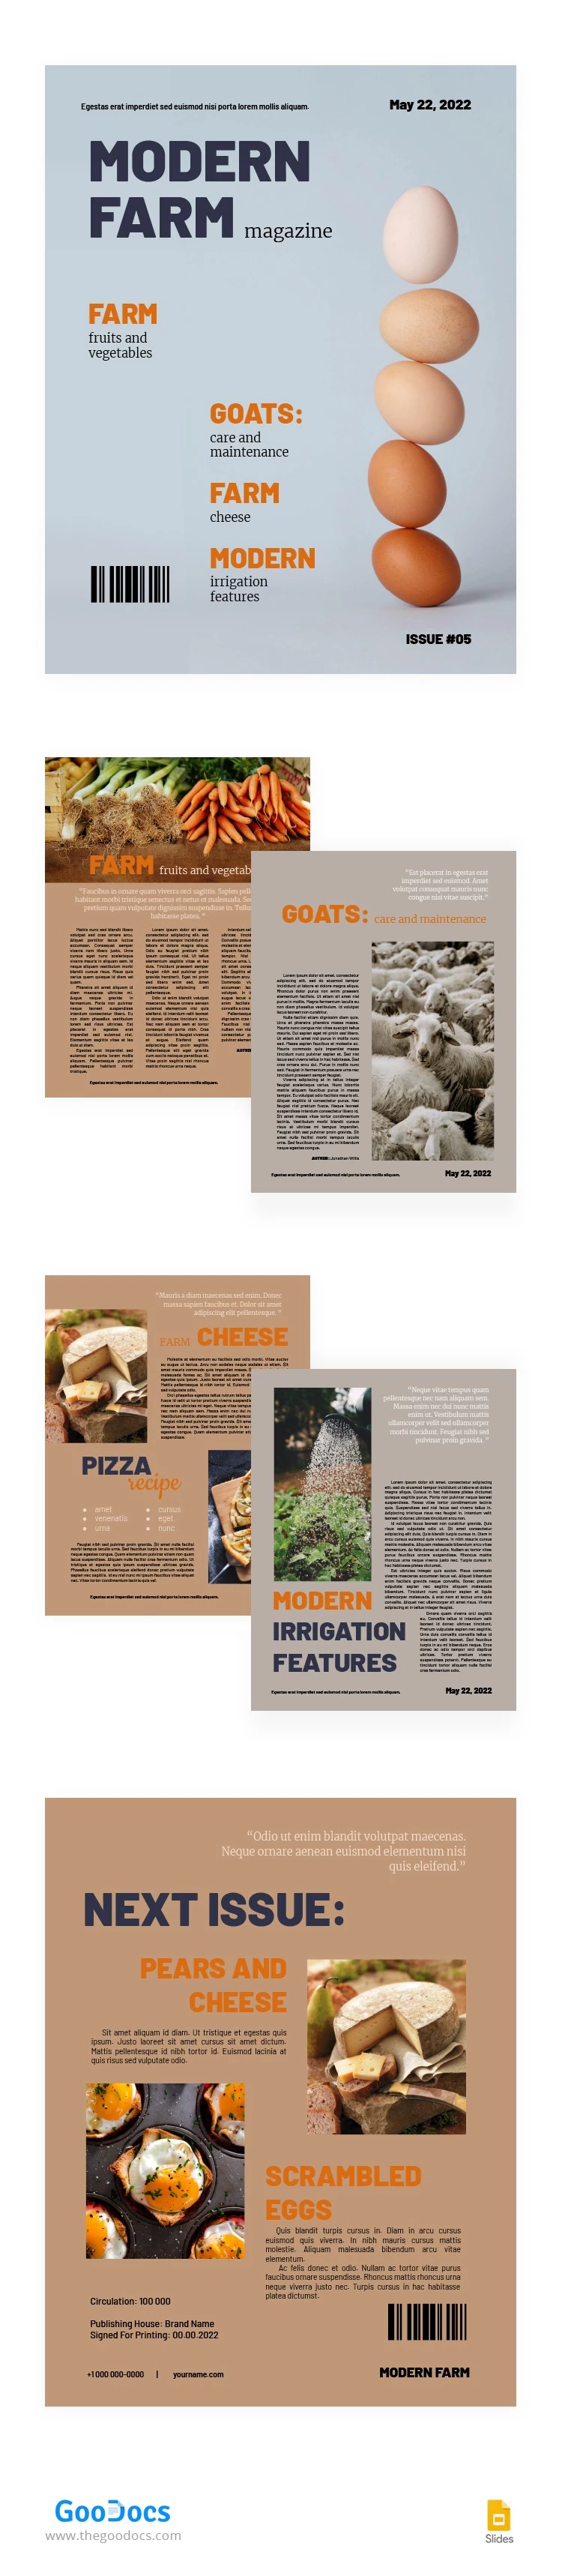 Modern Farm Magazine - free Google Docs Template - 10063263